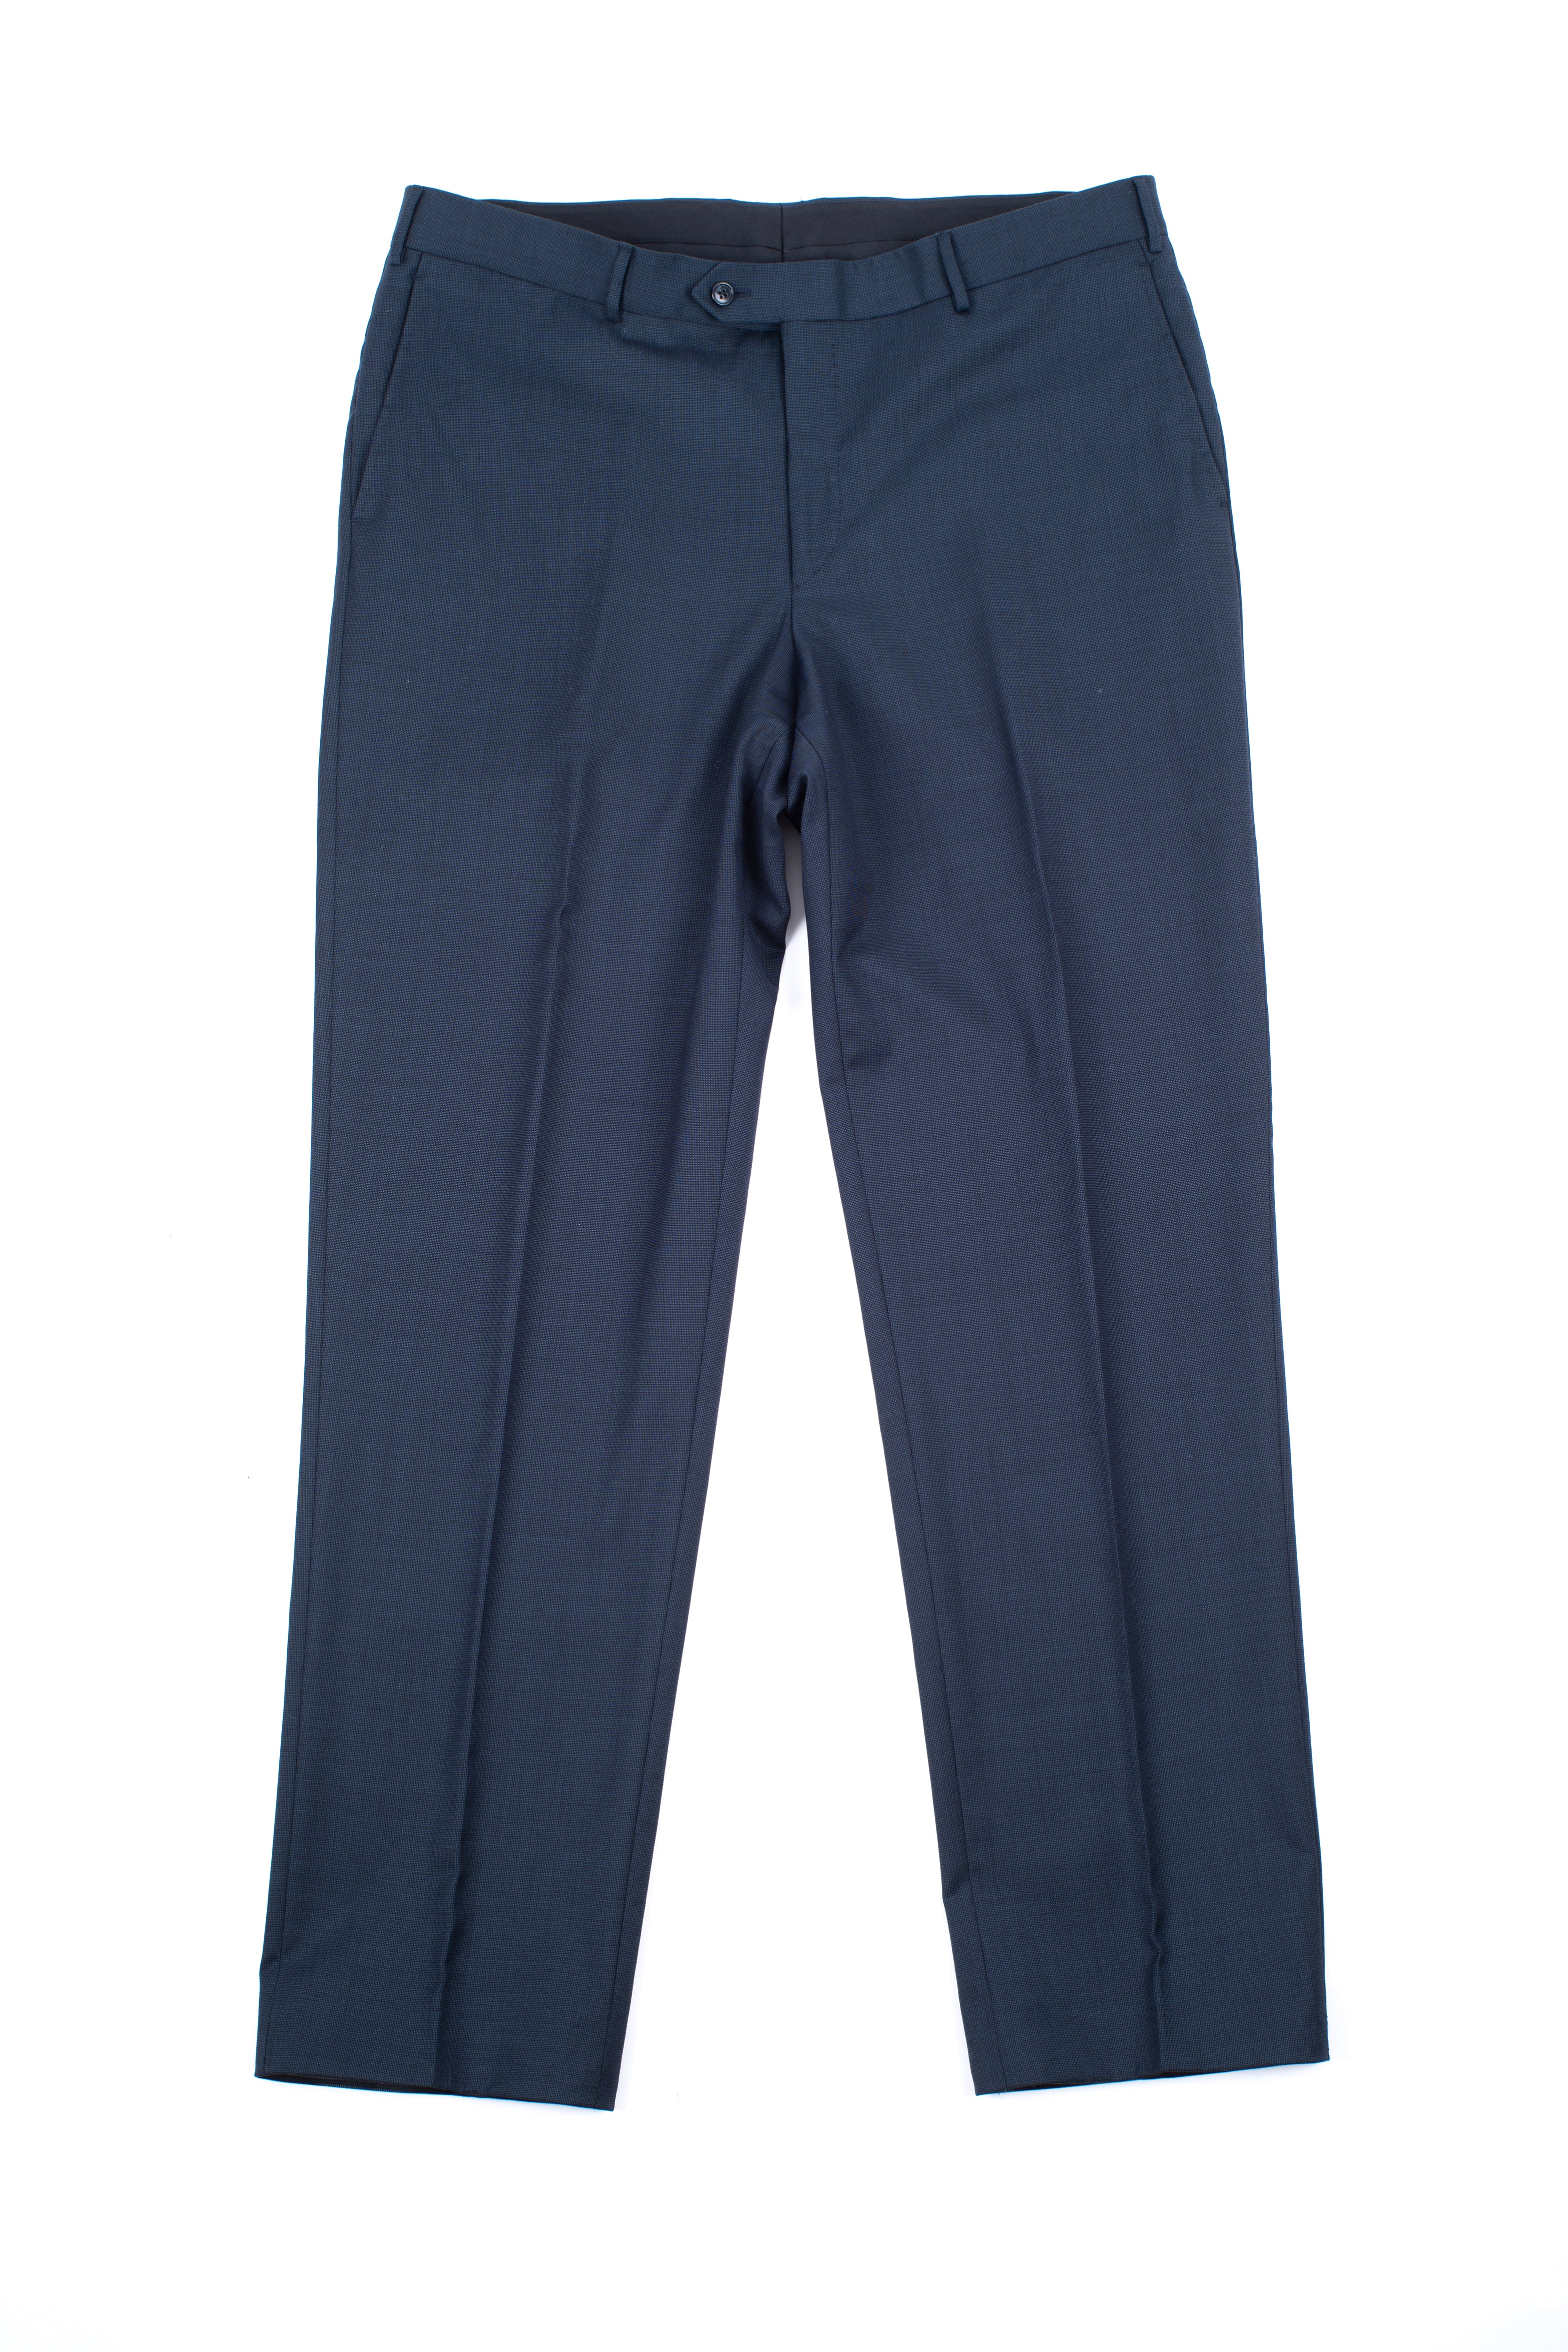 Corneliani Super 100's Merino Wool Navy Blue Suit, US 44R, EU 54